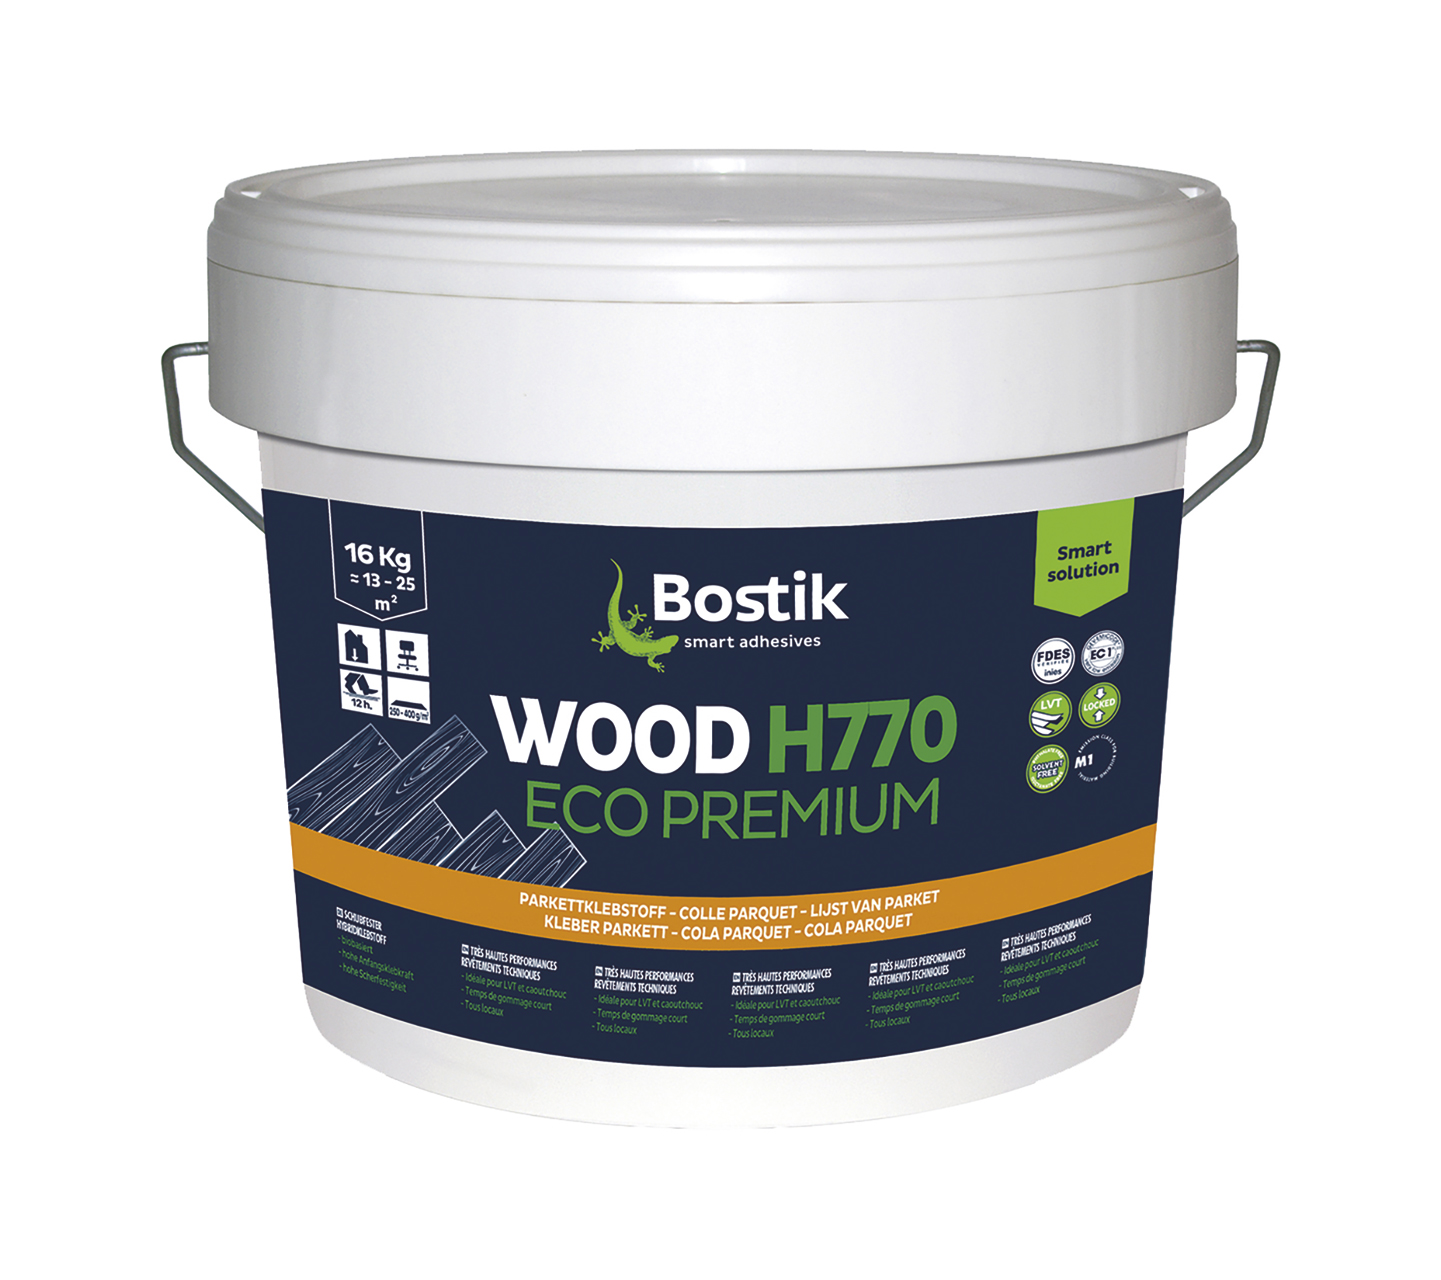 Bostik Parkettklebstoff Wood H770 Eco Premium 16 kg